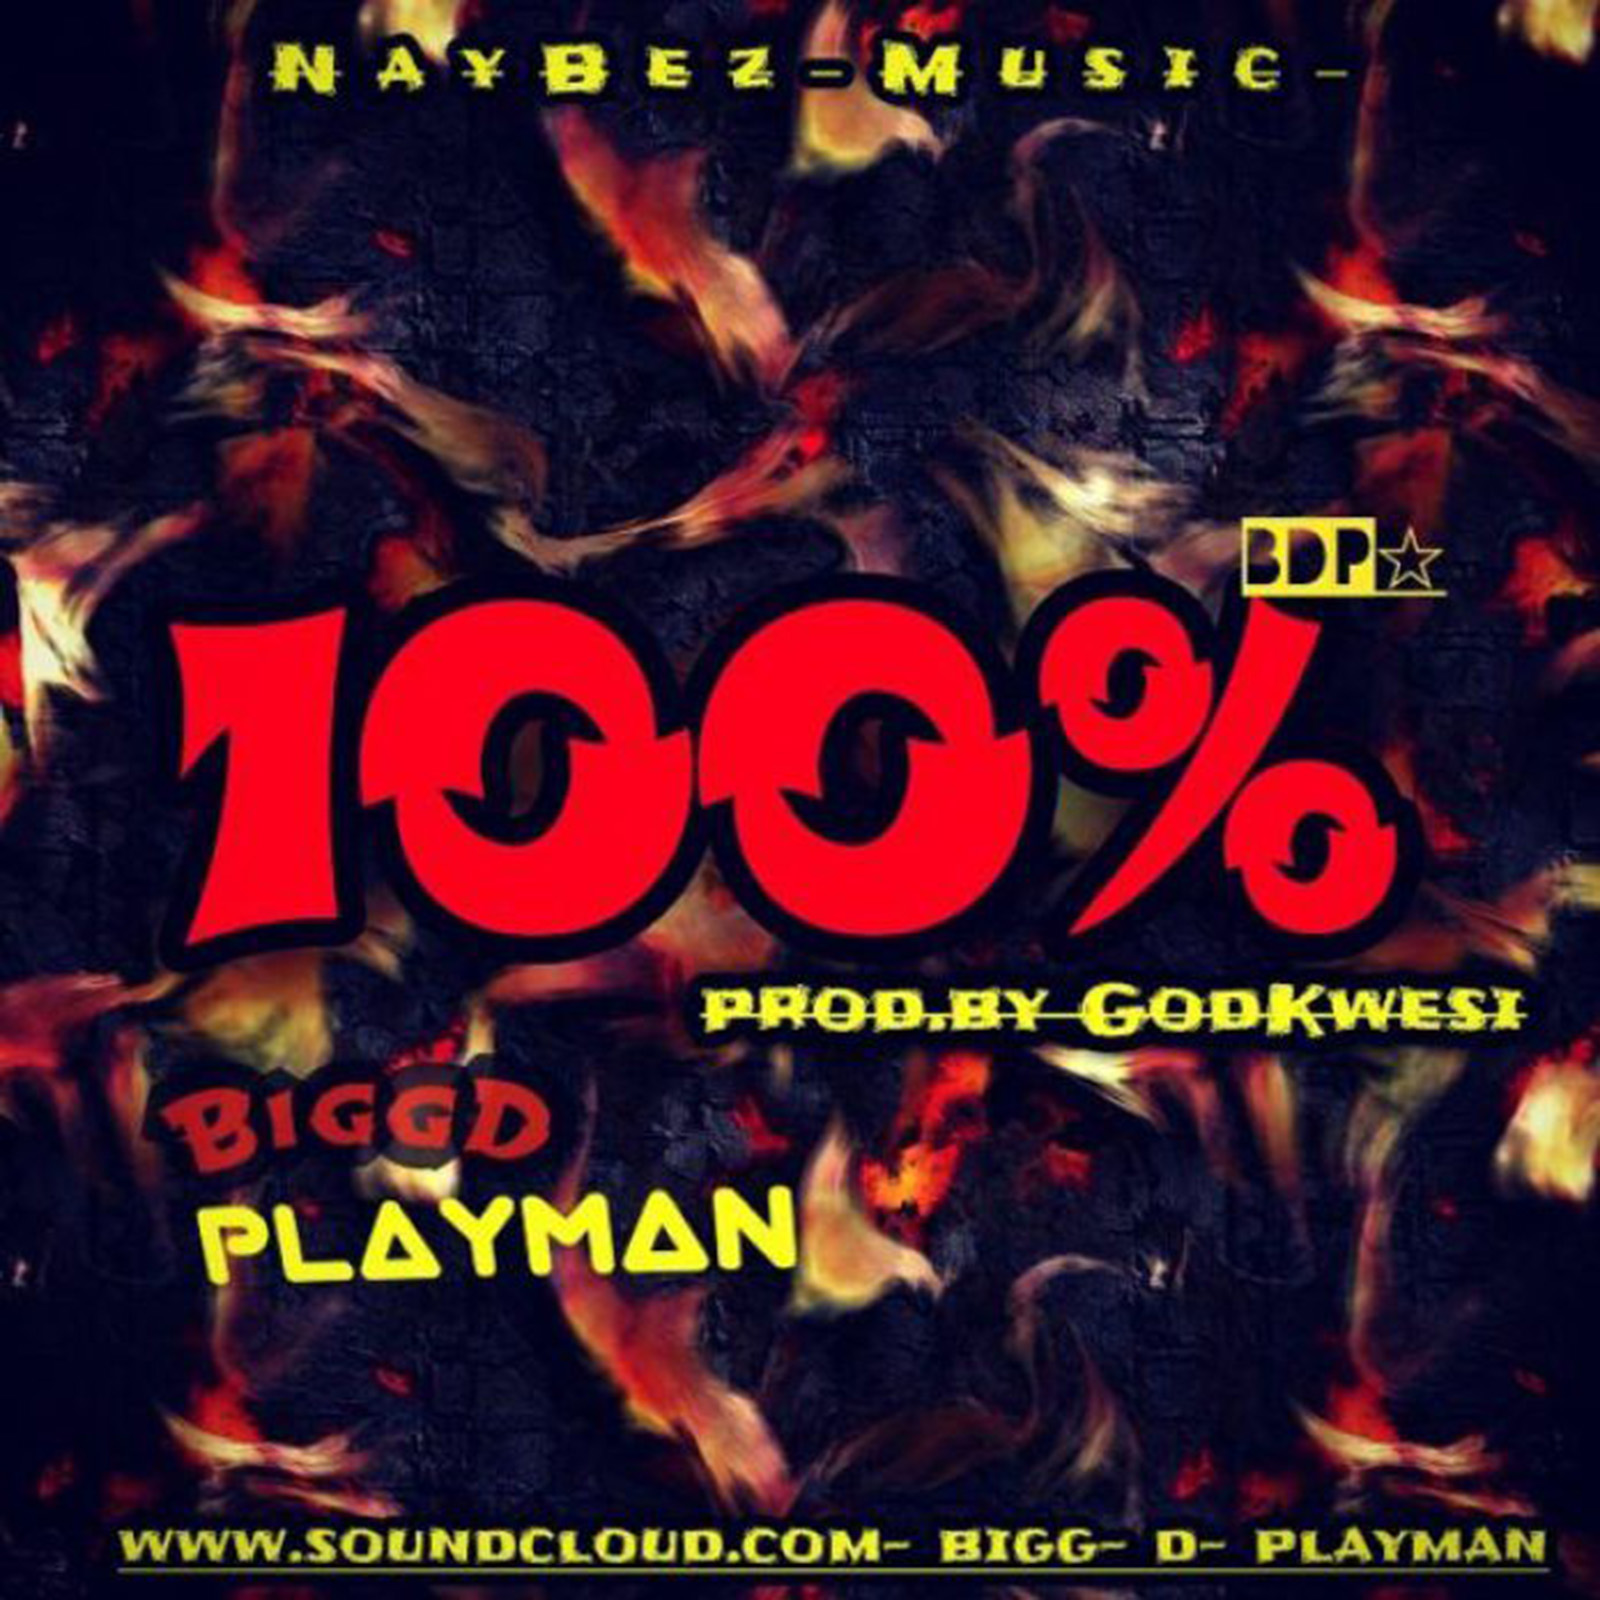 100 Percent by Bigg Playaman